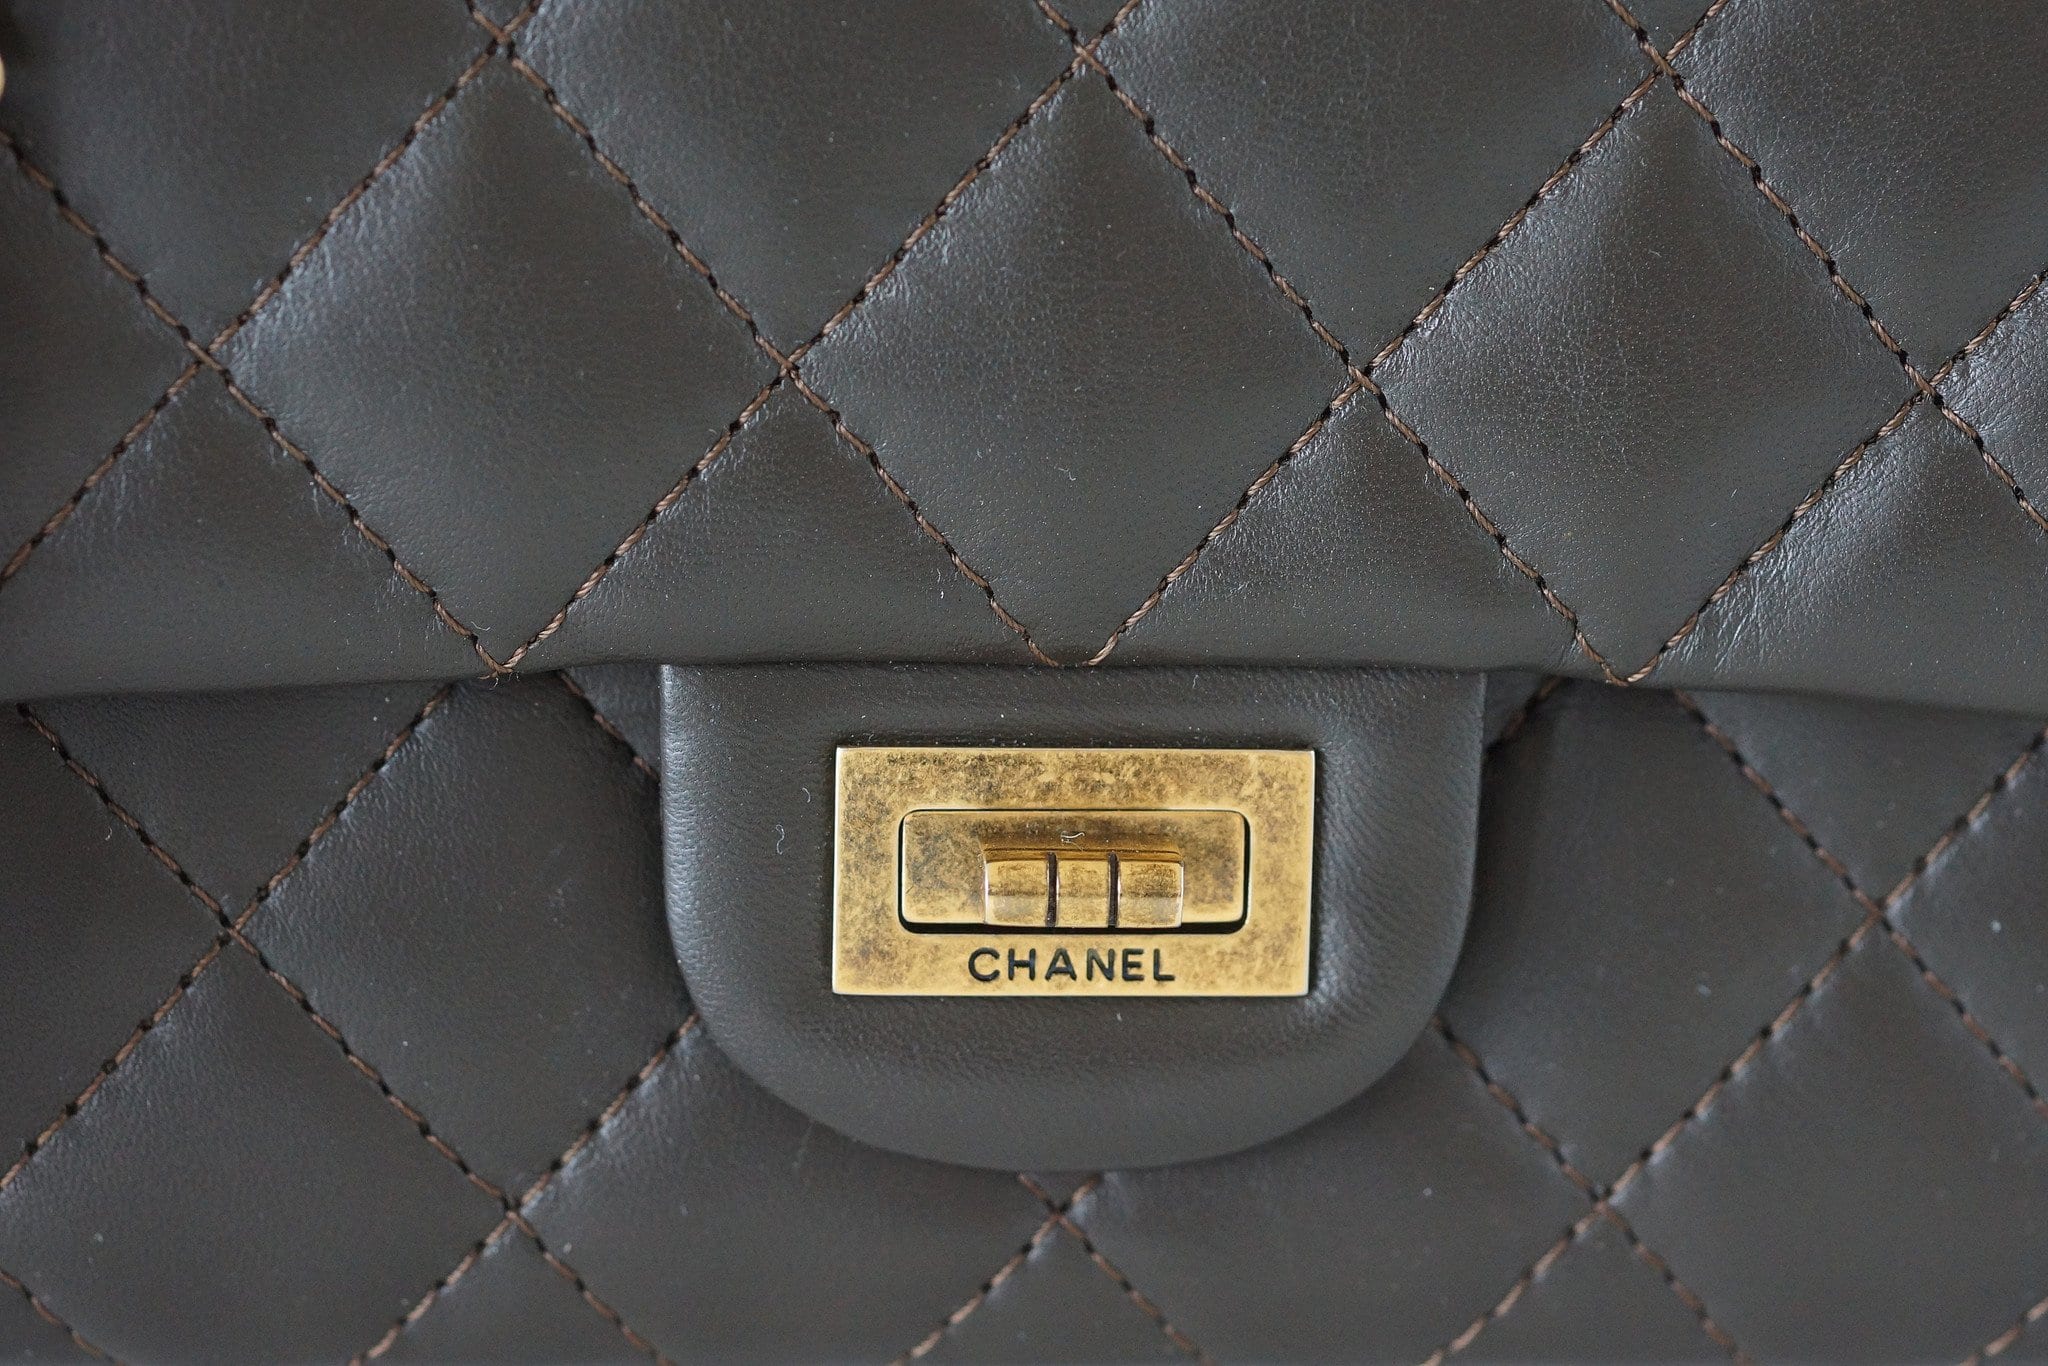 CHANEL 2.55 Classic Flap Bag Size 226 Black Aged Calfskin & Gold-Tone HW  $11000